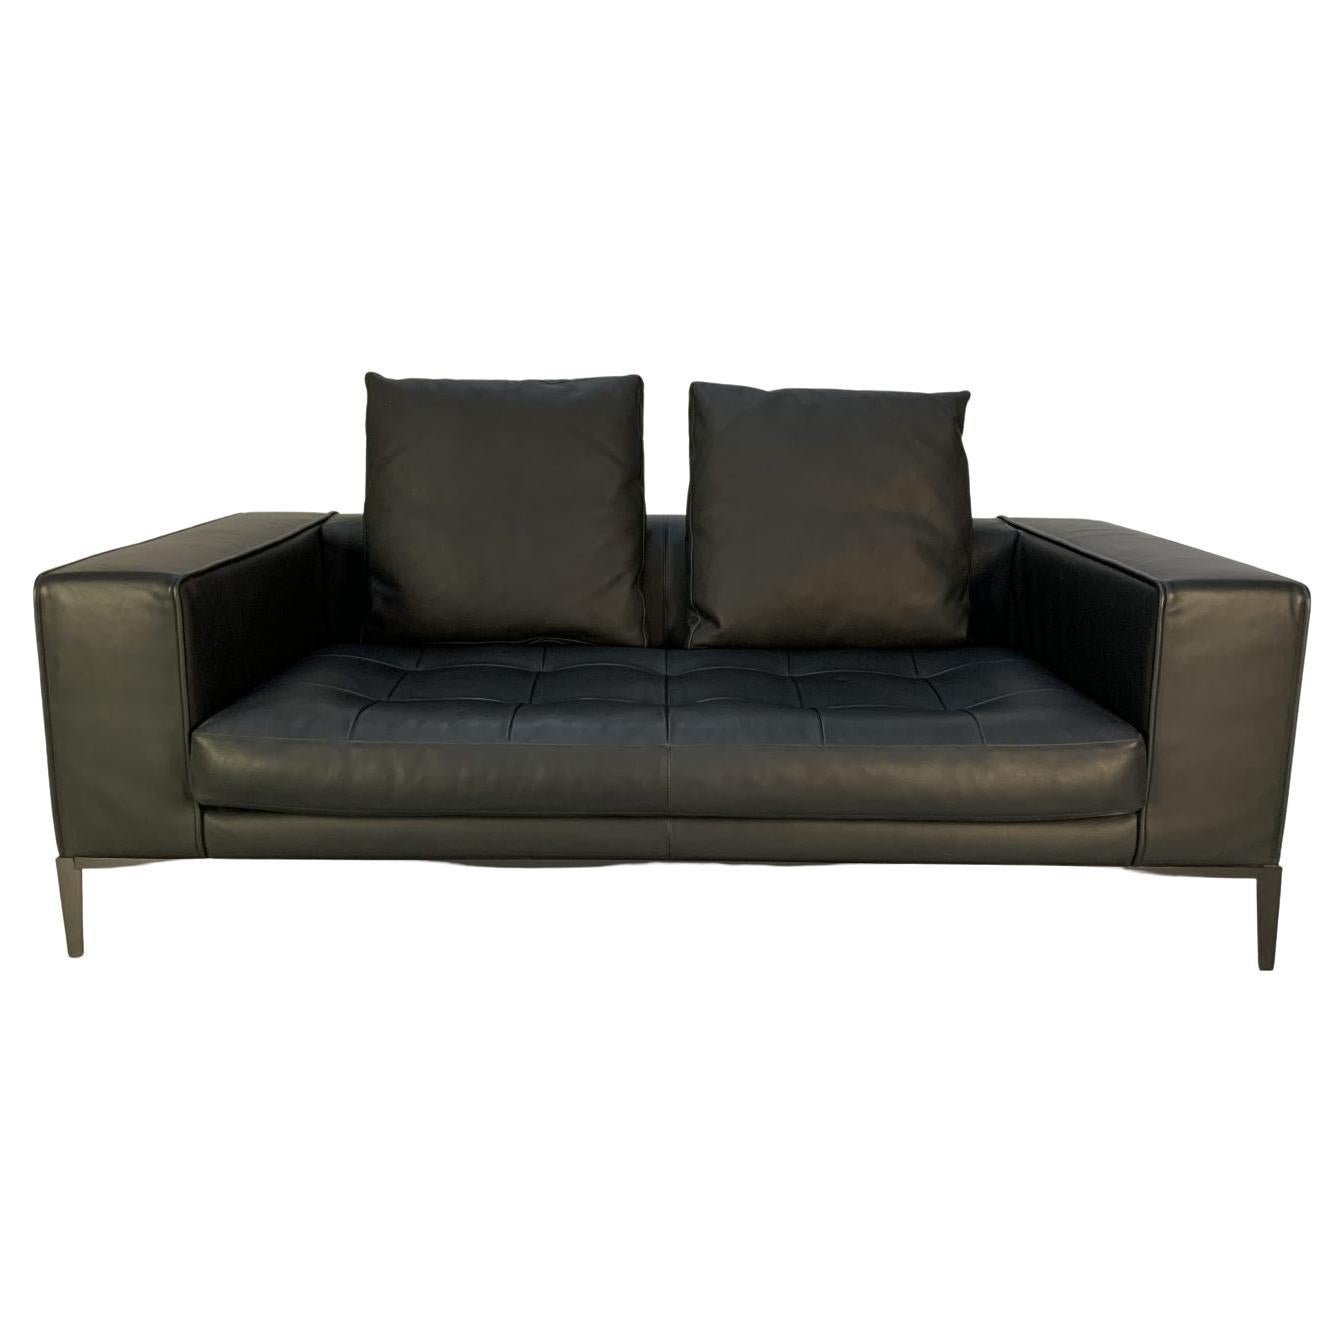 B&B Italia “Simplex ” 2.5-Seat Sofa – In Charcoal “Gamma” Leather For Sale